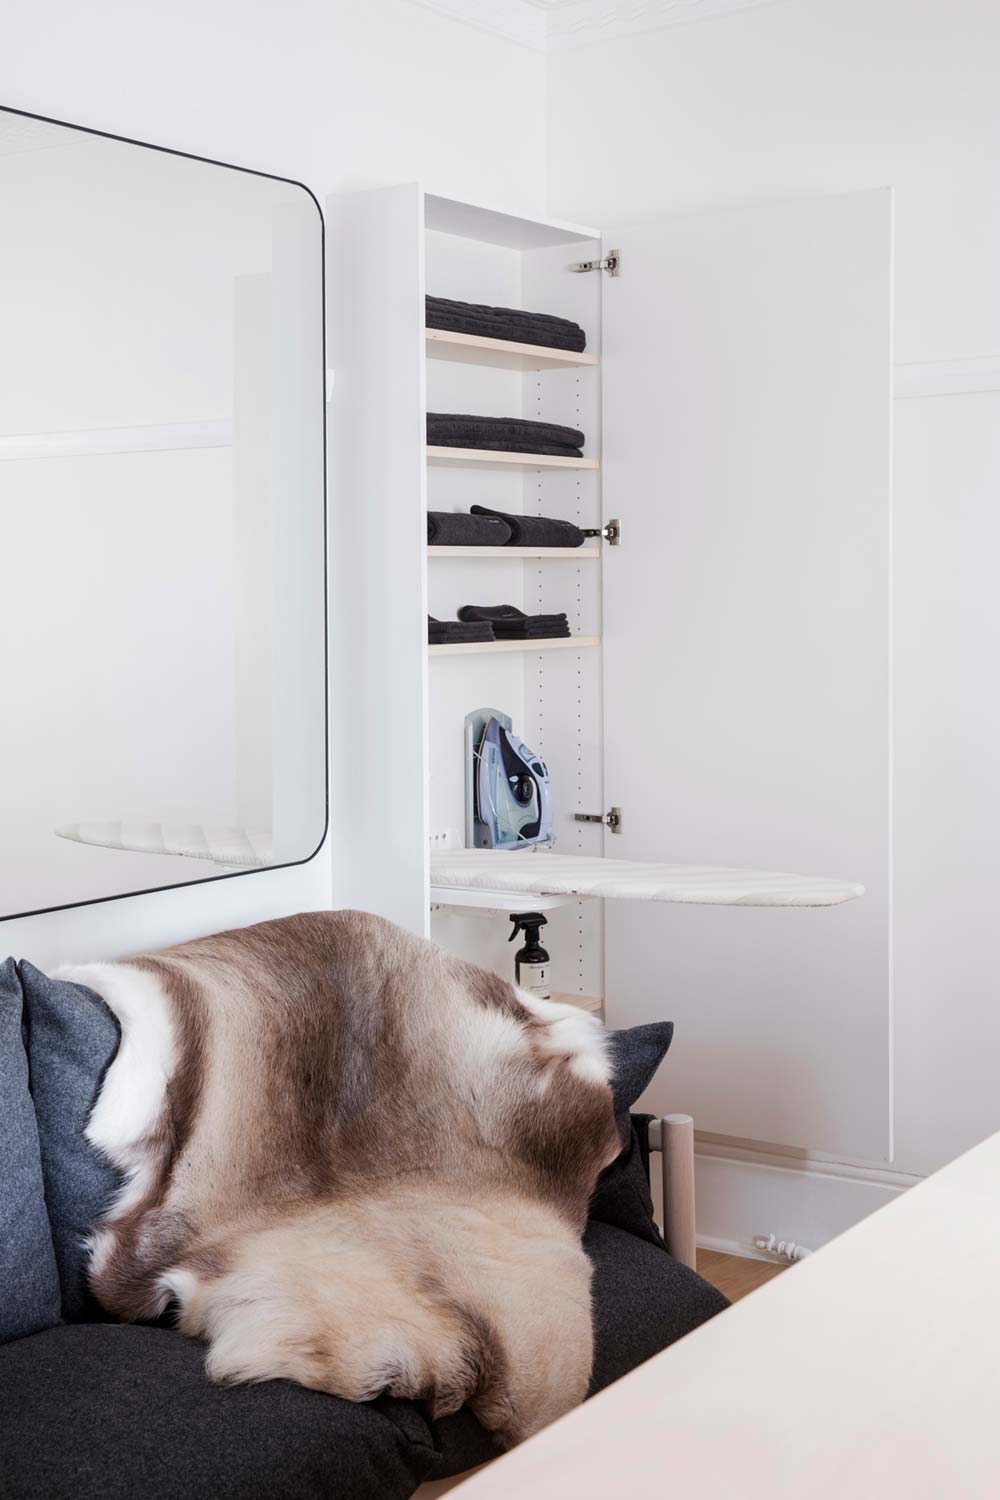 Дизайн интерьера маленькой квартиры: стиль и комфорт